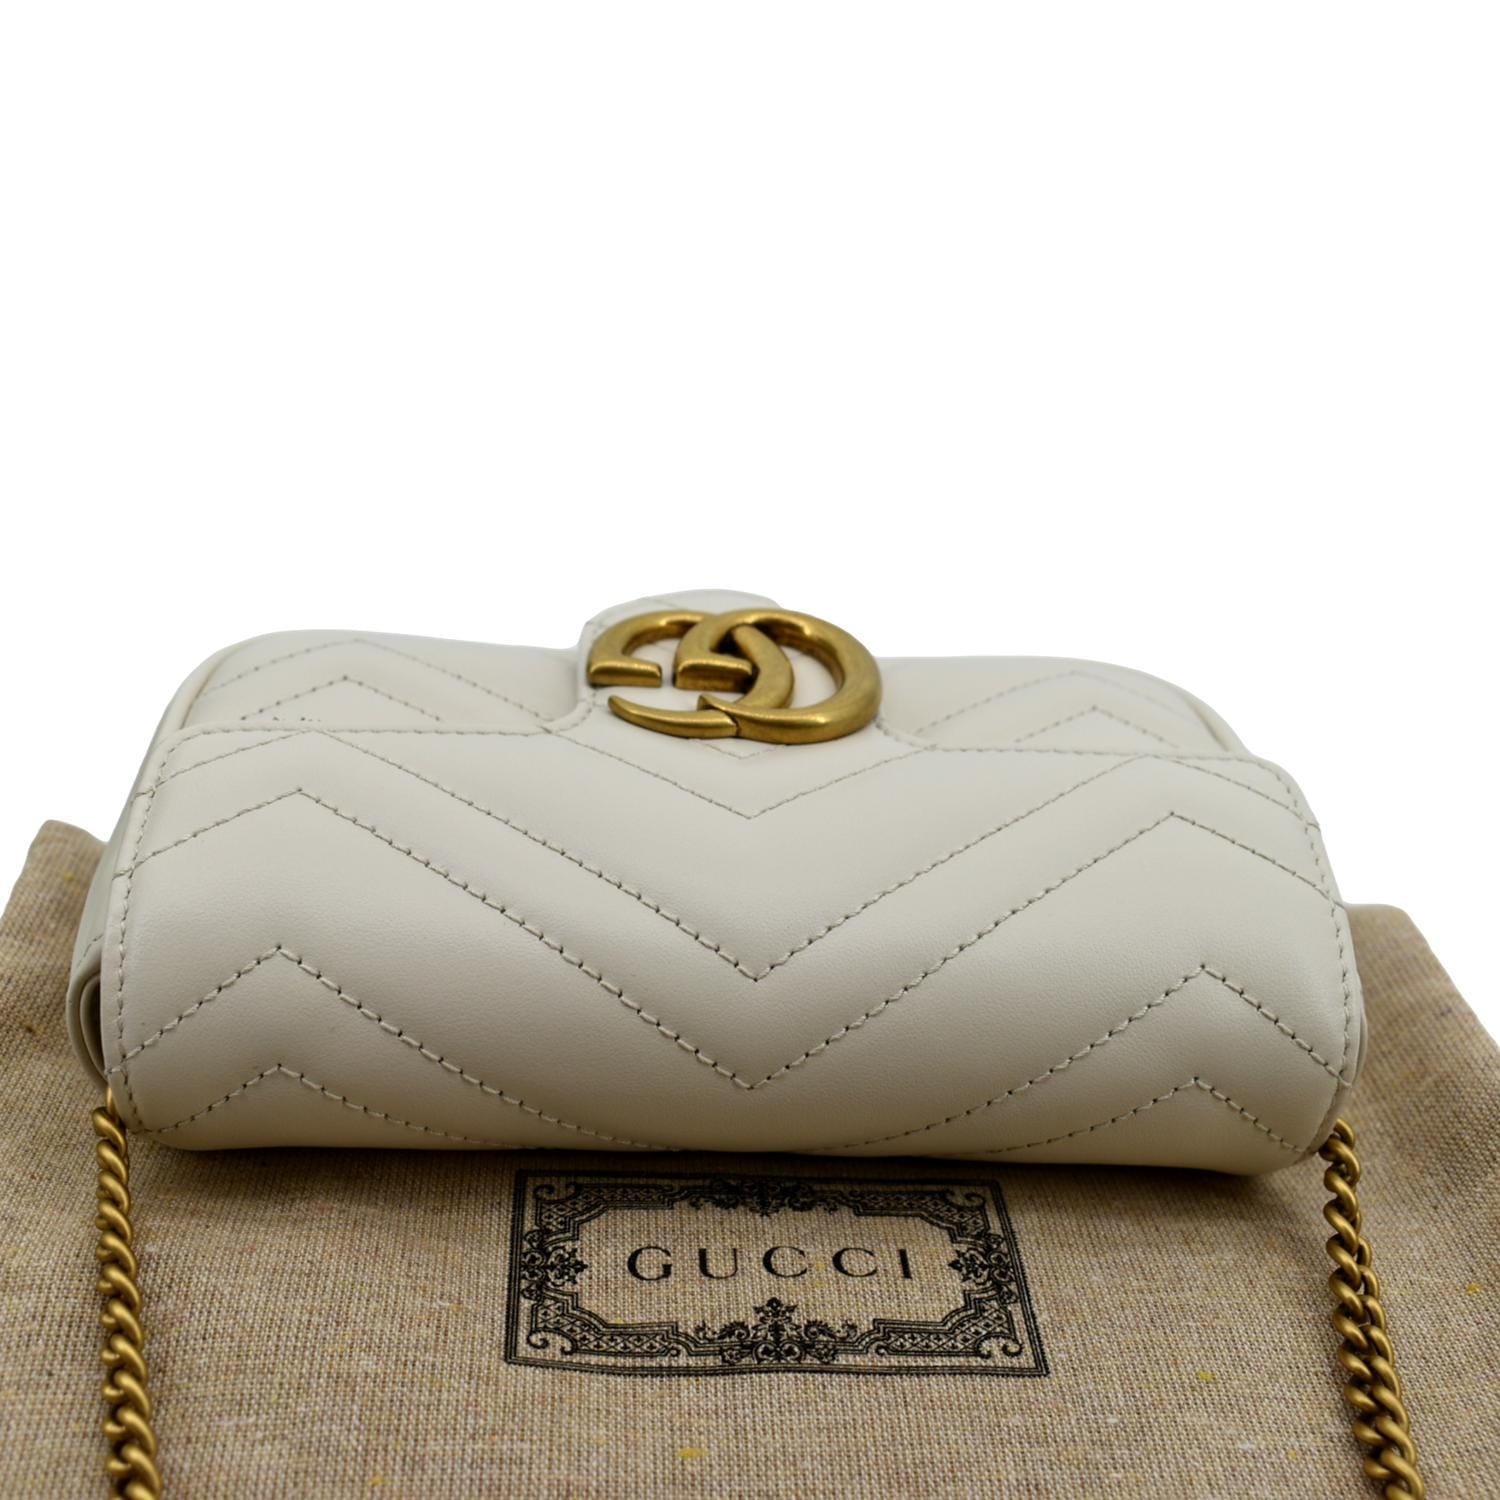 GUCCI GG Marmont Super Mini Matelasse Leather Shoulder Bag White 47643